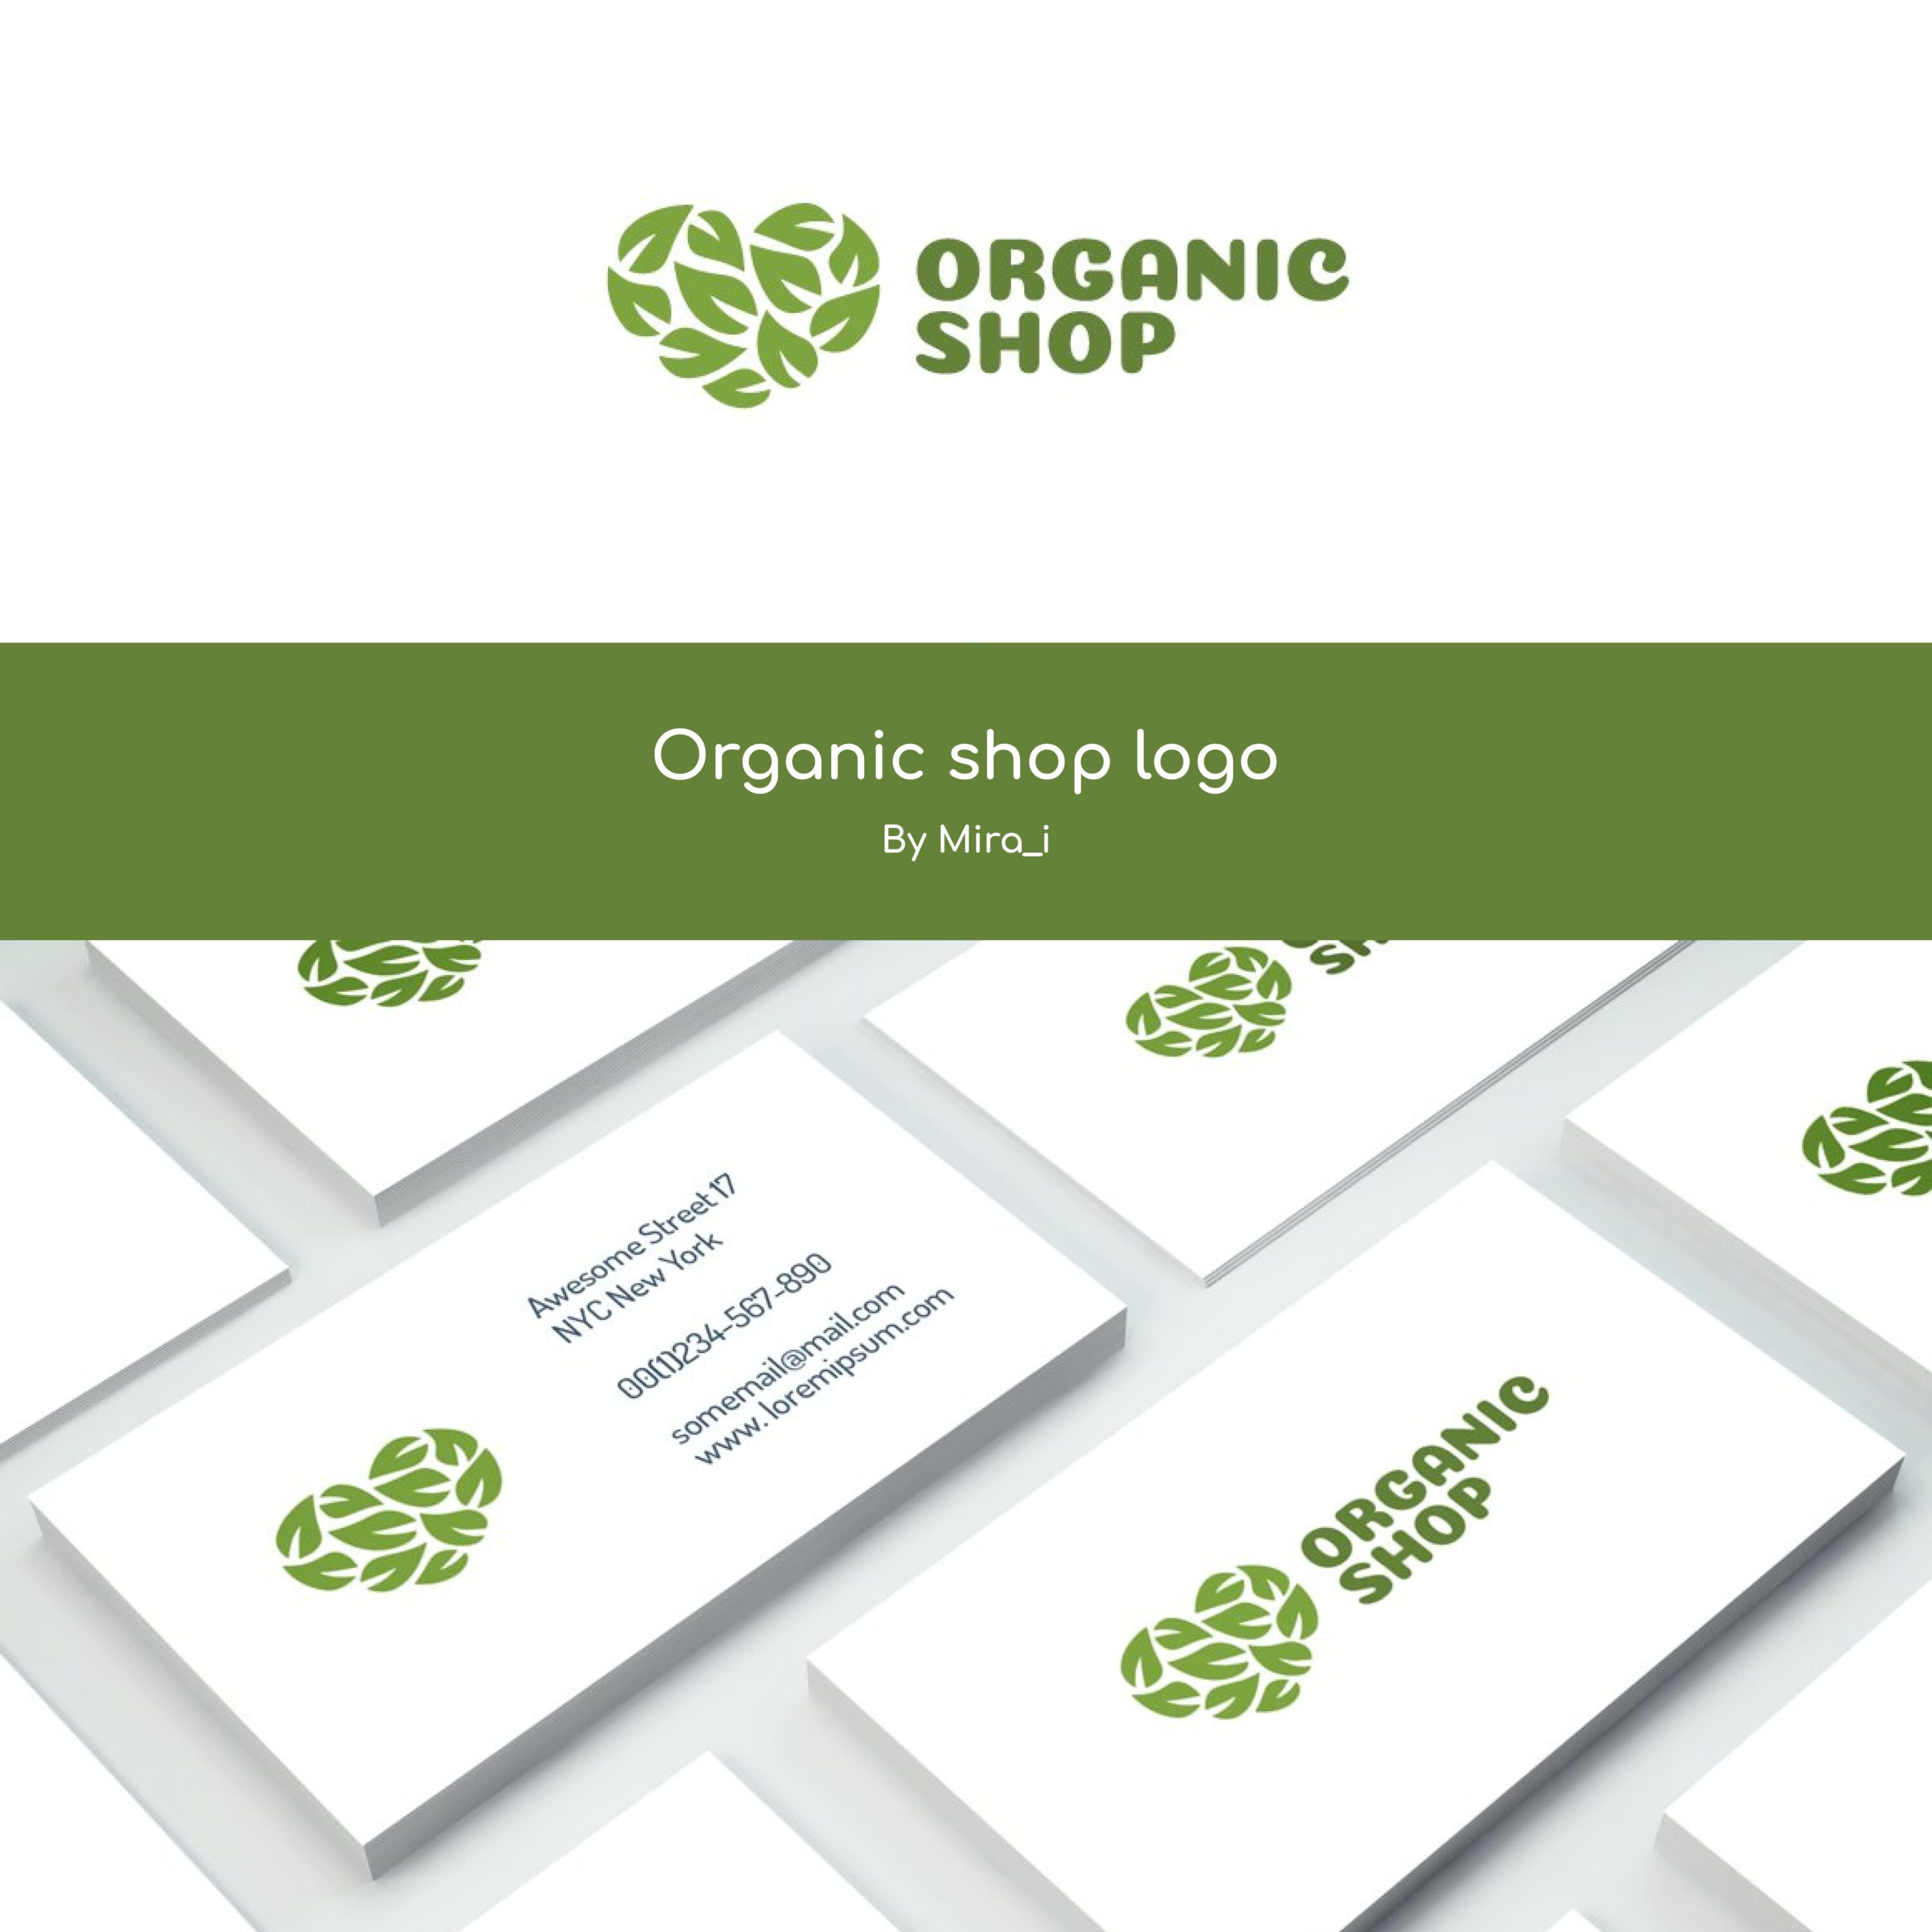 Organic shop logo cover.